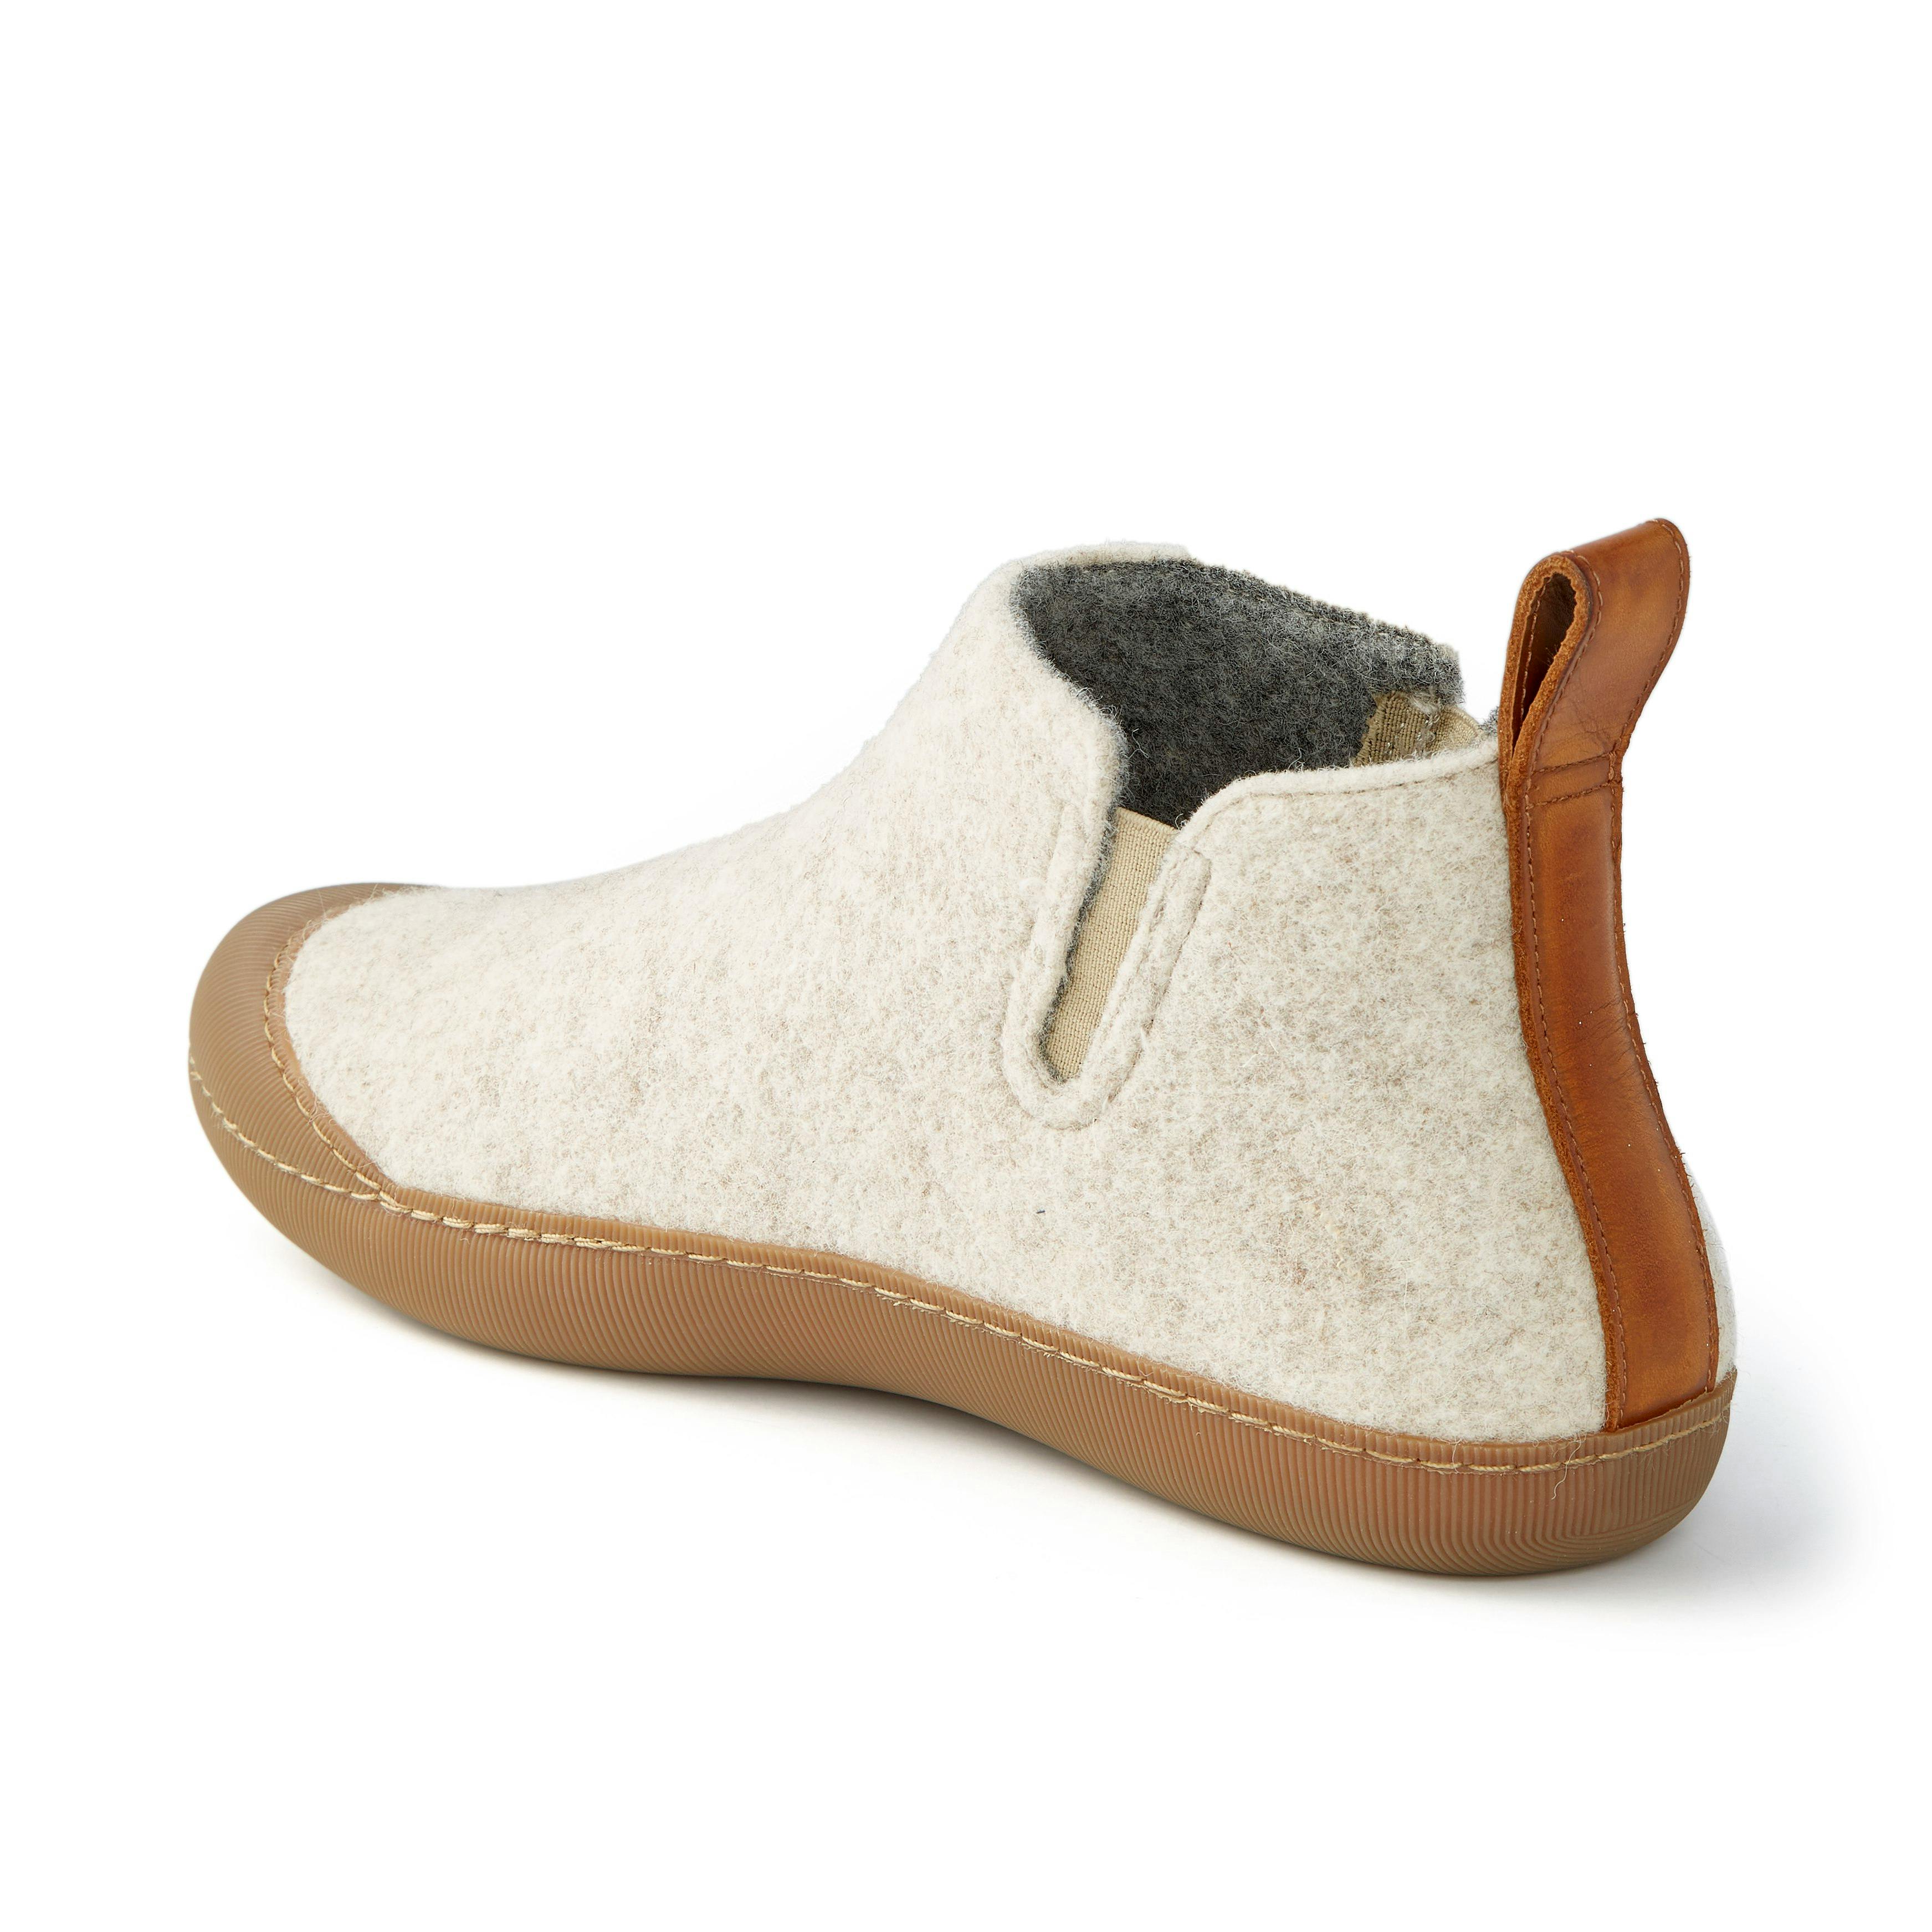 Greys Wool Outdoor Slipper Boot - Oat/Gum, Slippers